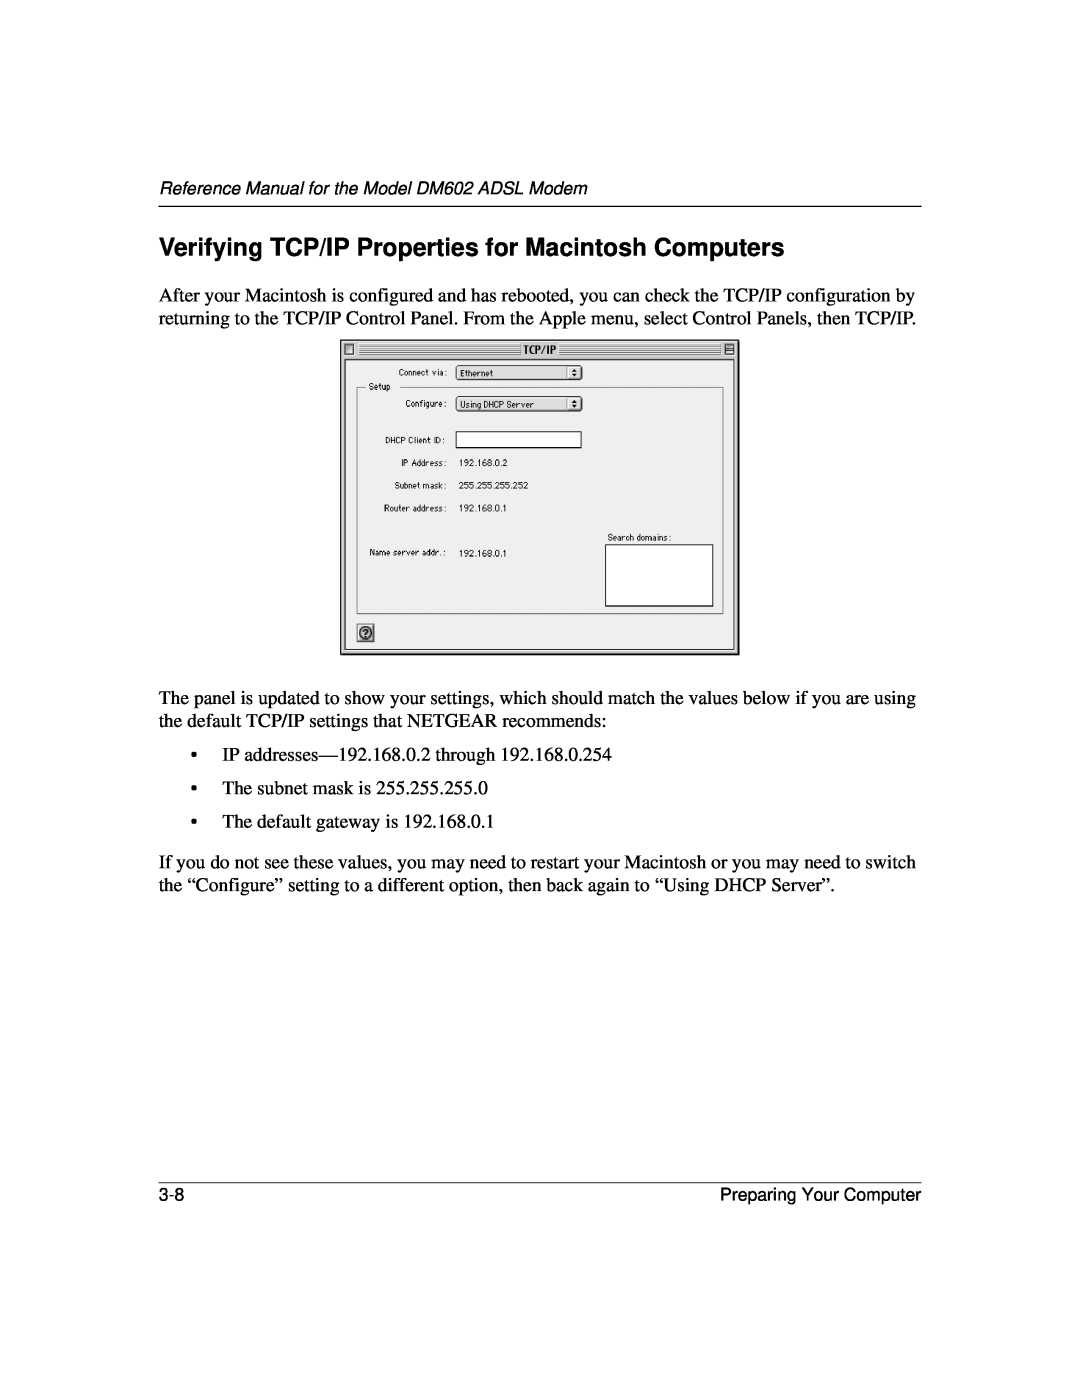 NETGEAR DM602 manual Verifying TCP/IP Properties for Macintosh Computers 